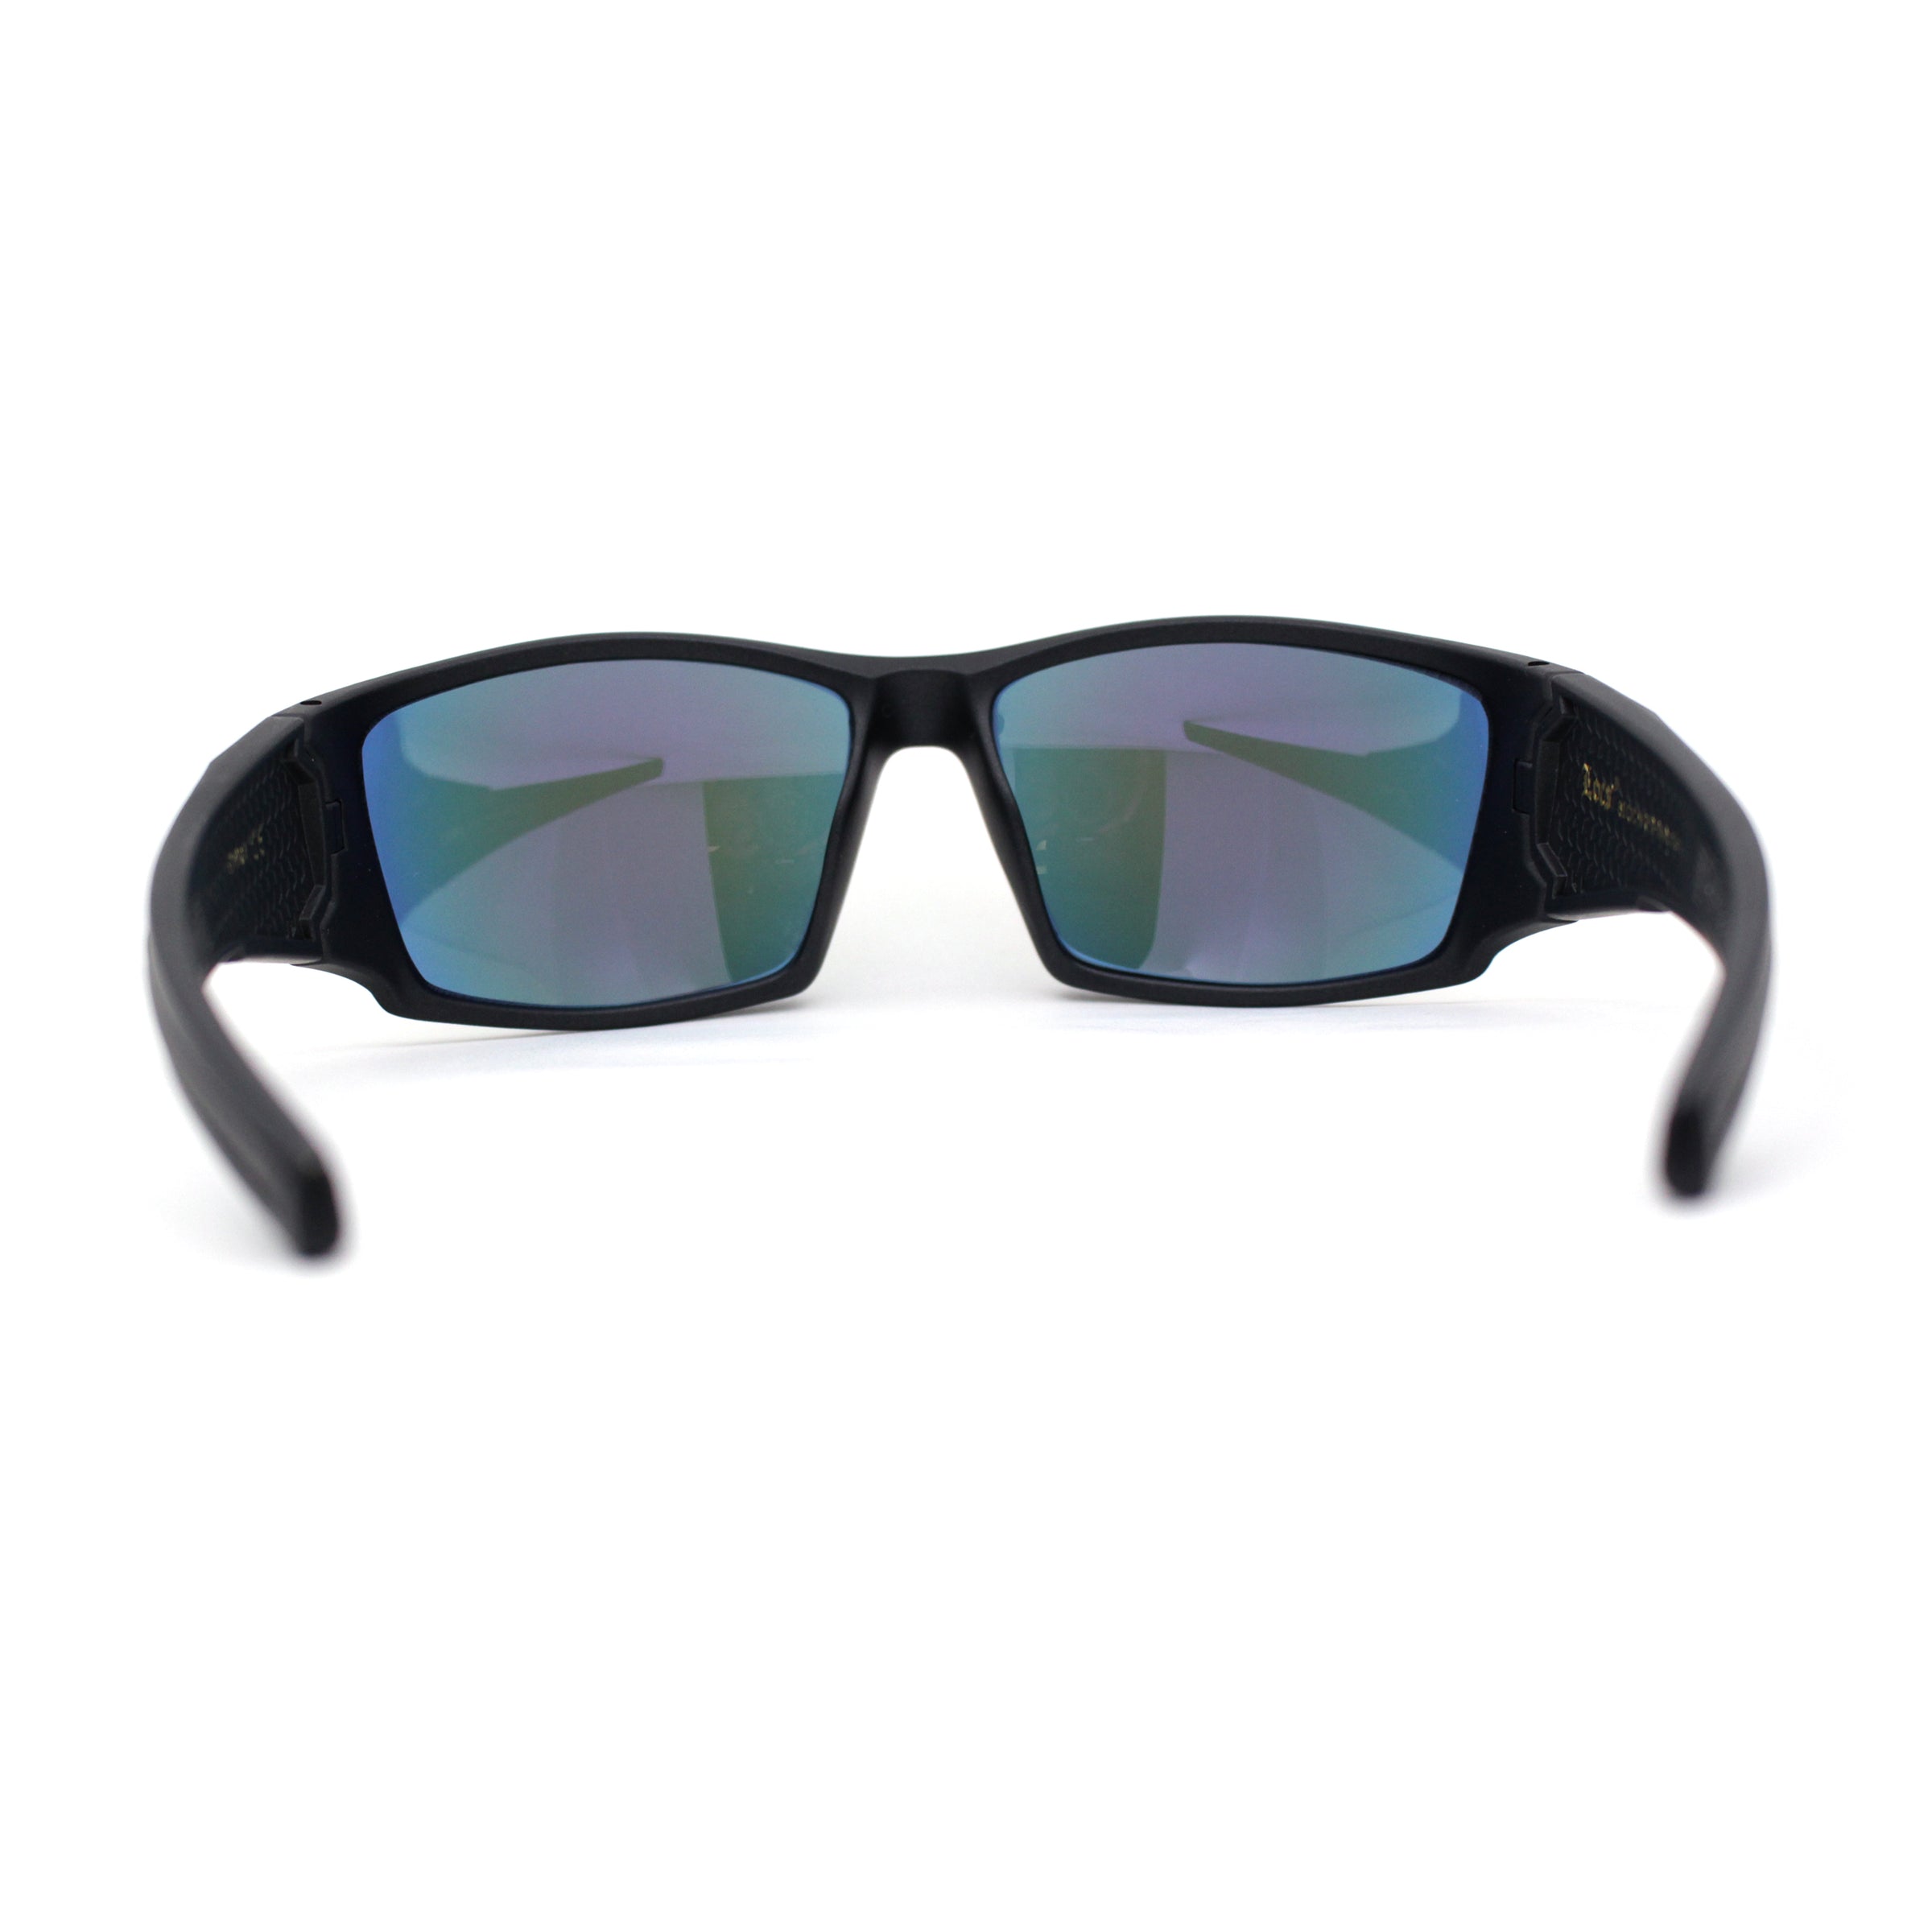 Sunglasses superawesome106 Matte Wrap Around Biker Sport – Locs Mirror Black Color Style